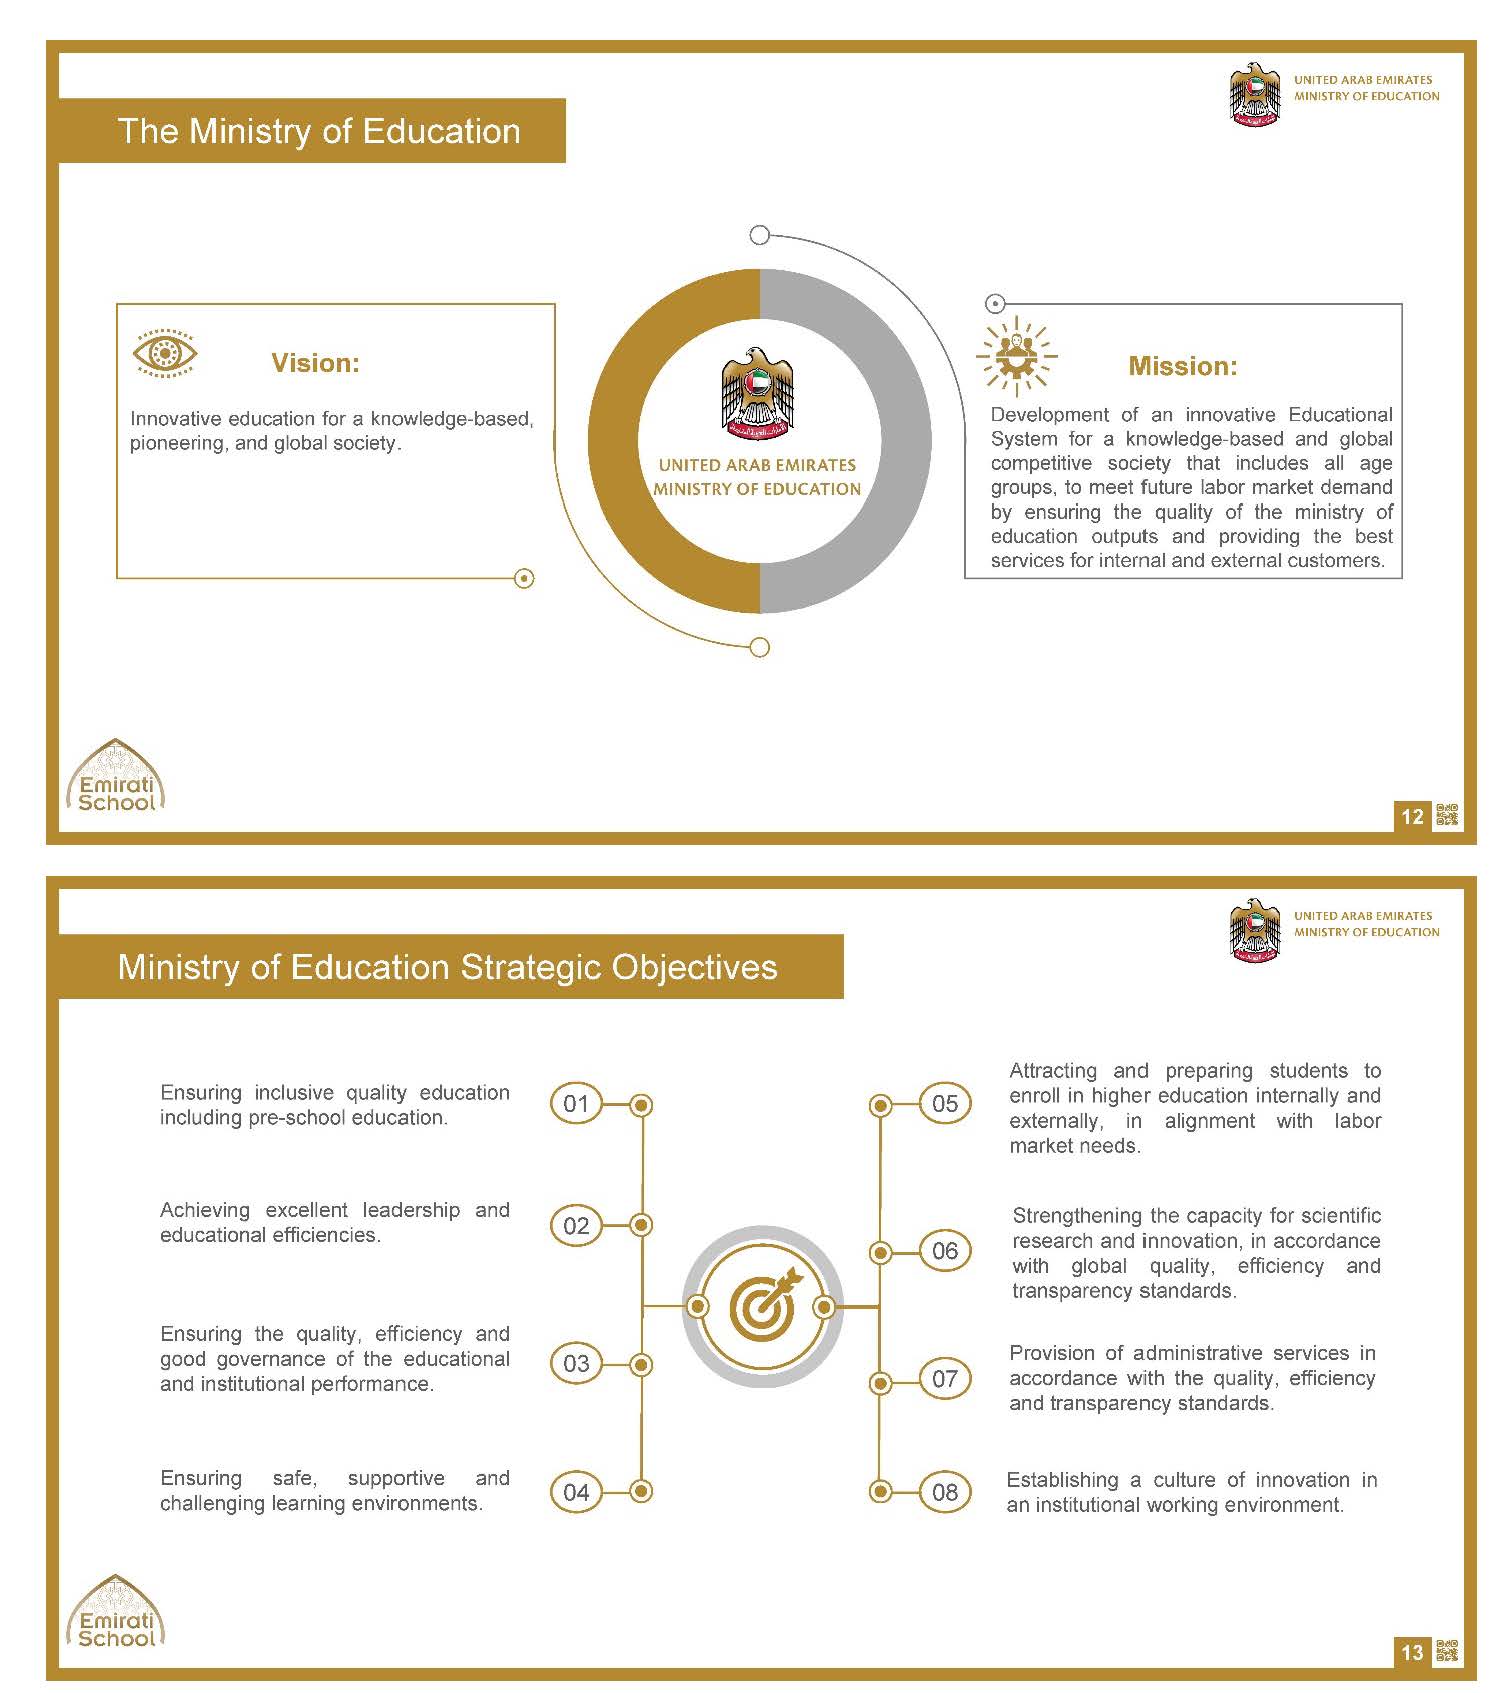 Higher Education in United Arab Emirates